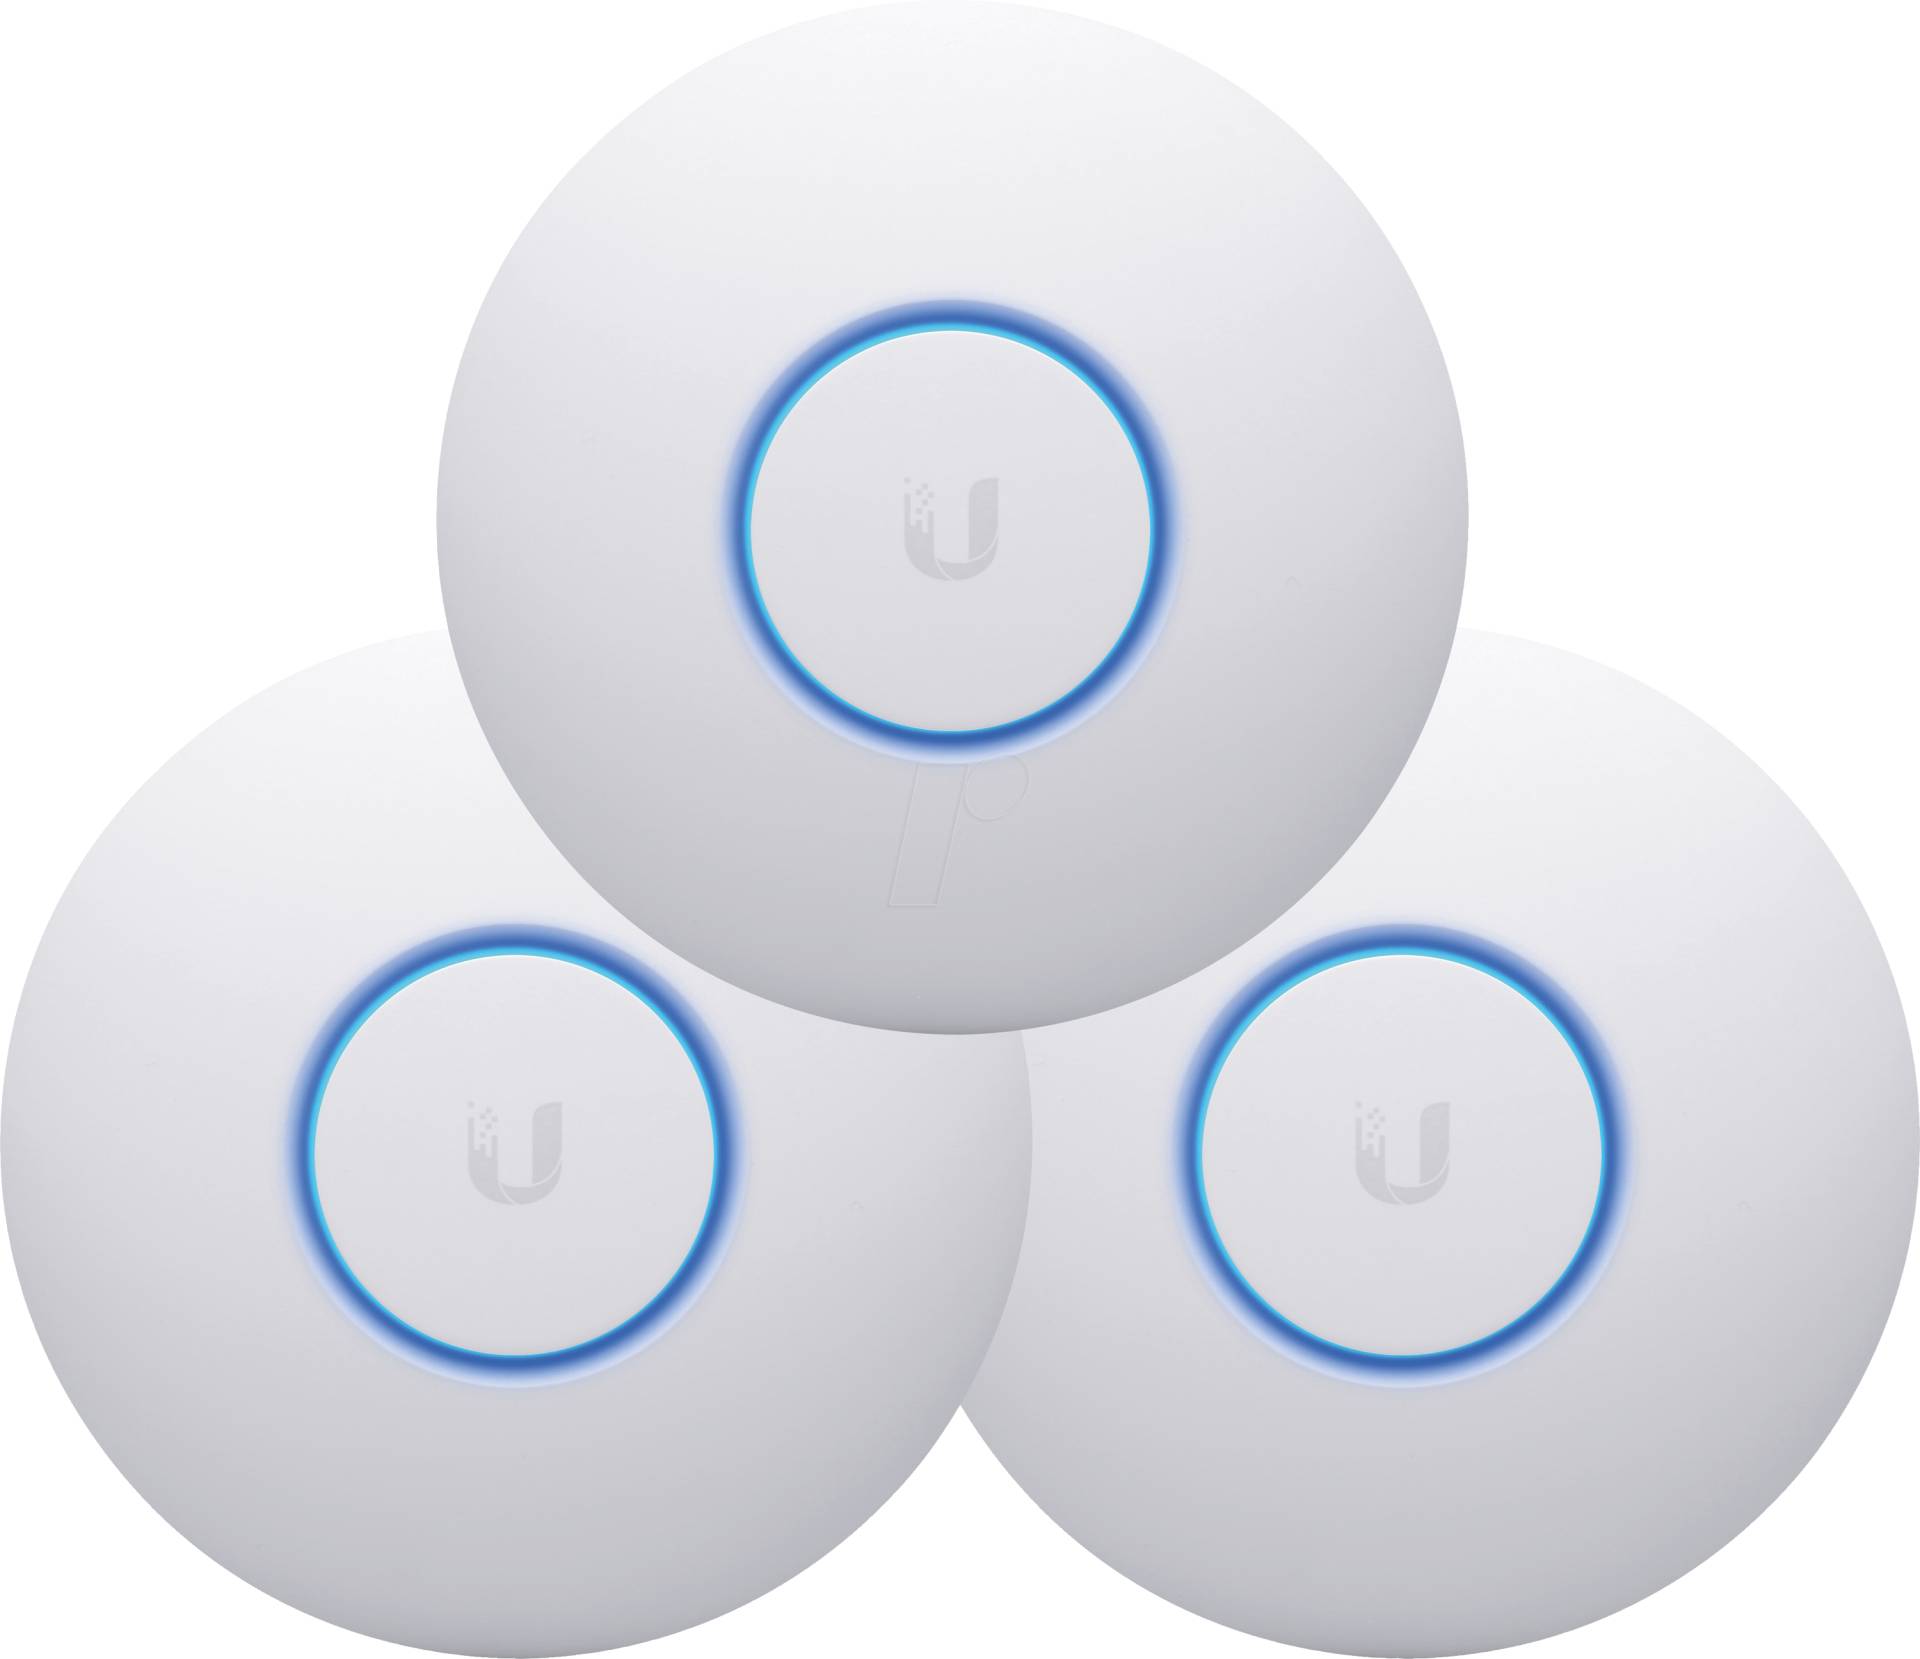 UBI UAPNANOHD3 - WLAN Access Point 2.4/5 GHz 2033 MBit/s 3er Pack von Ubiquiti